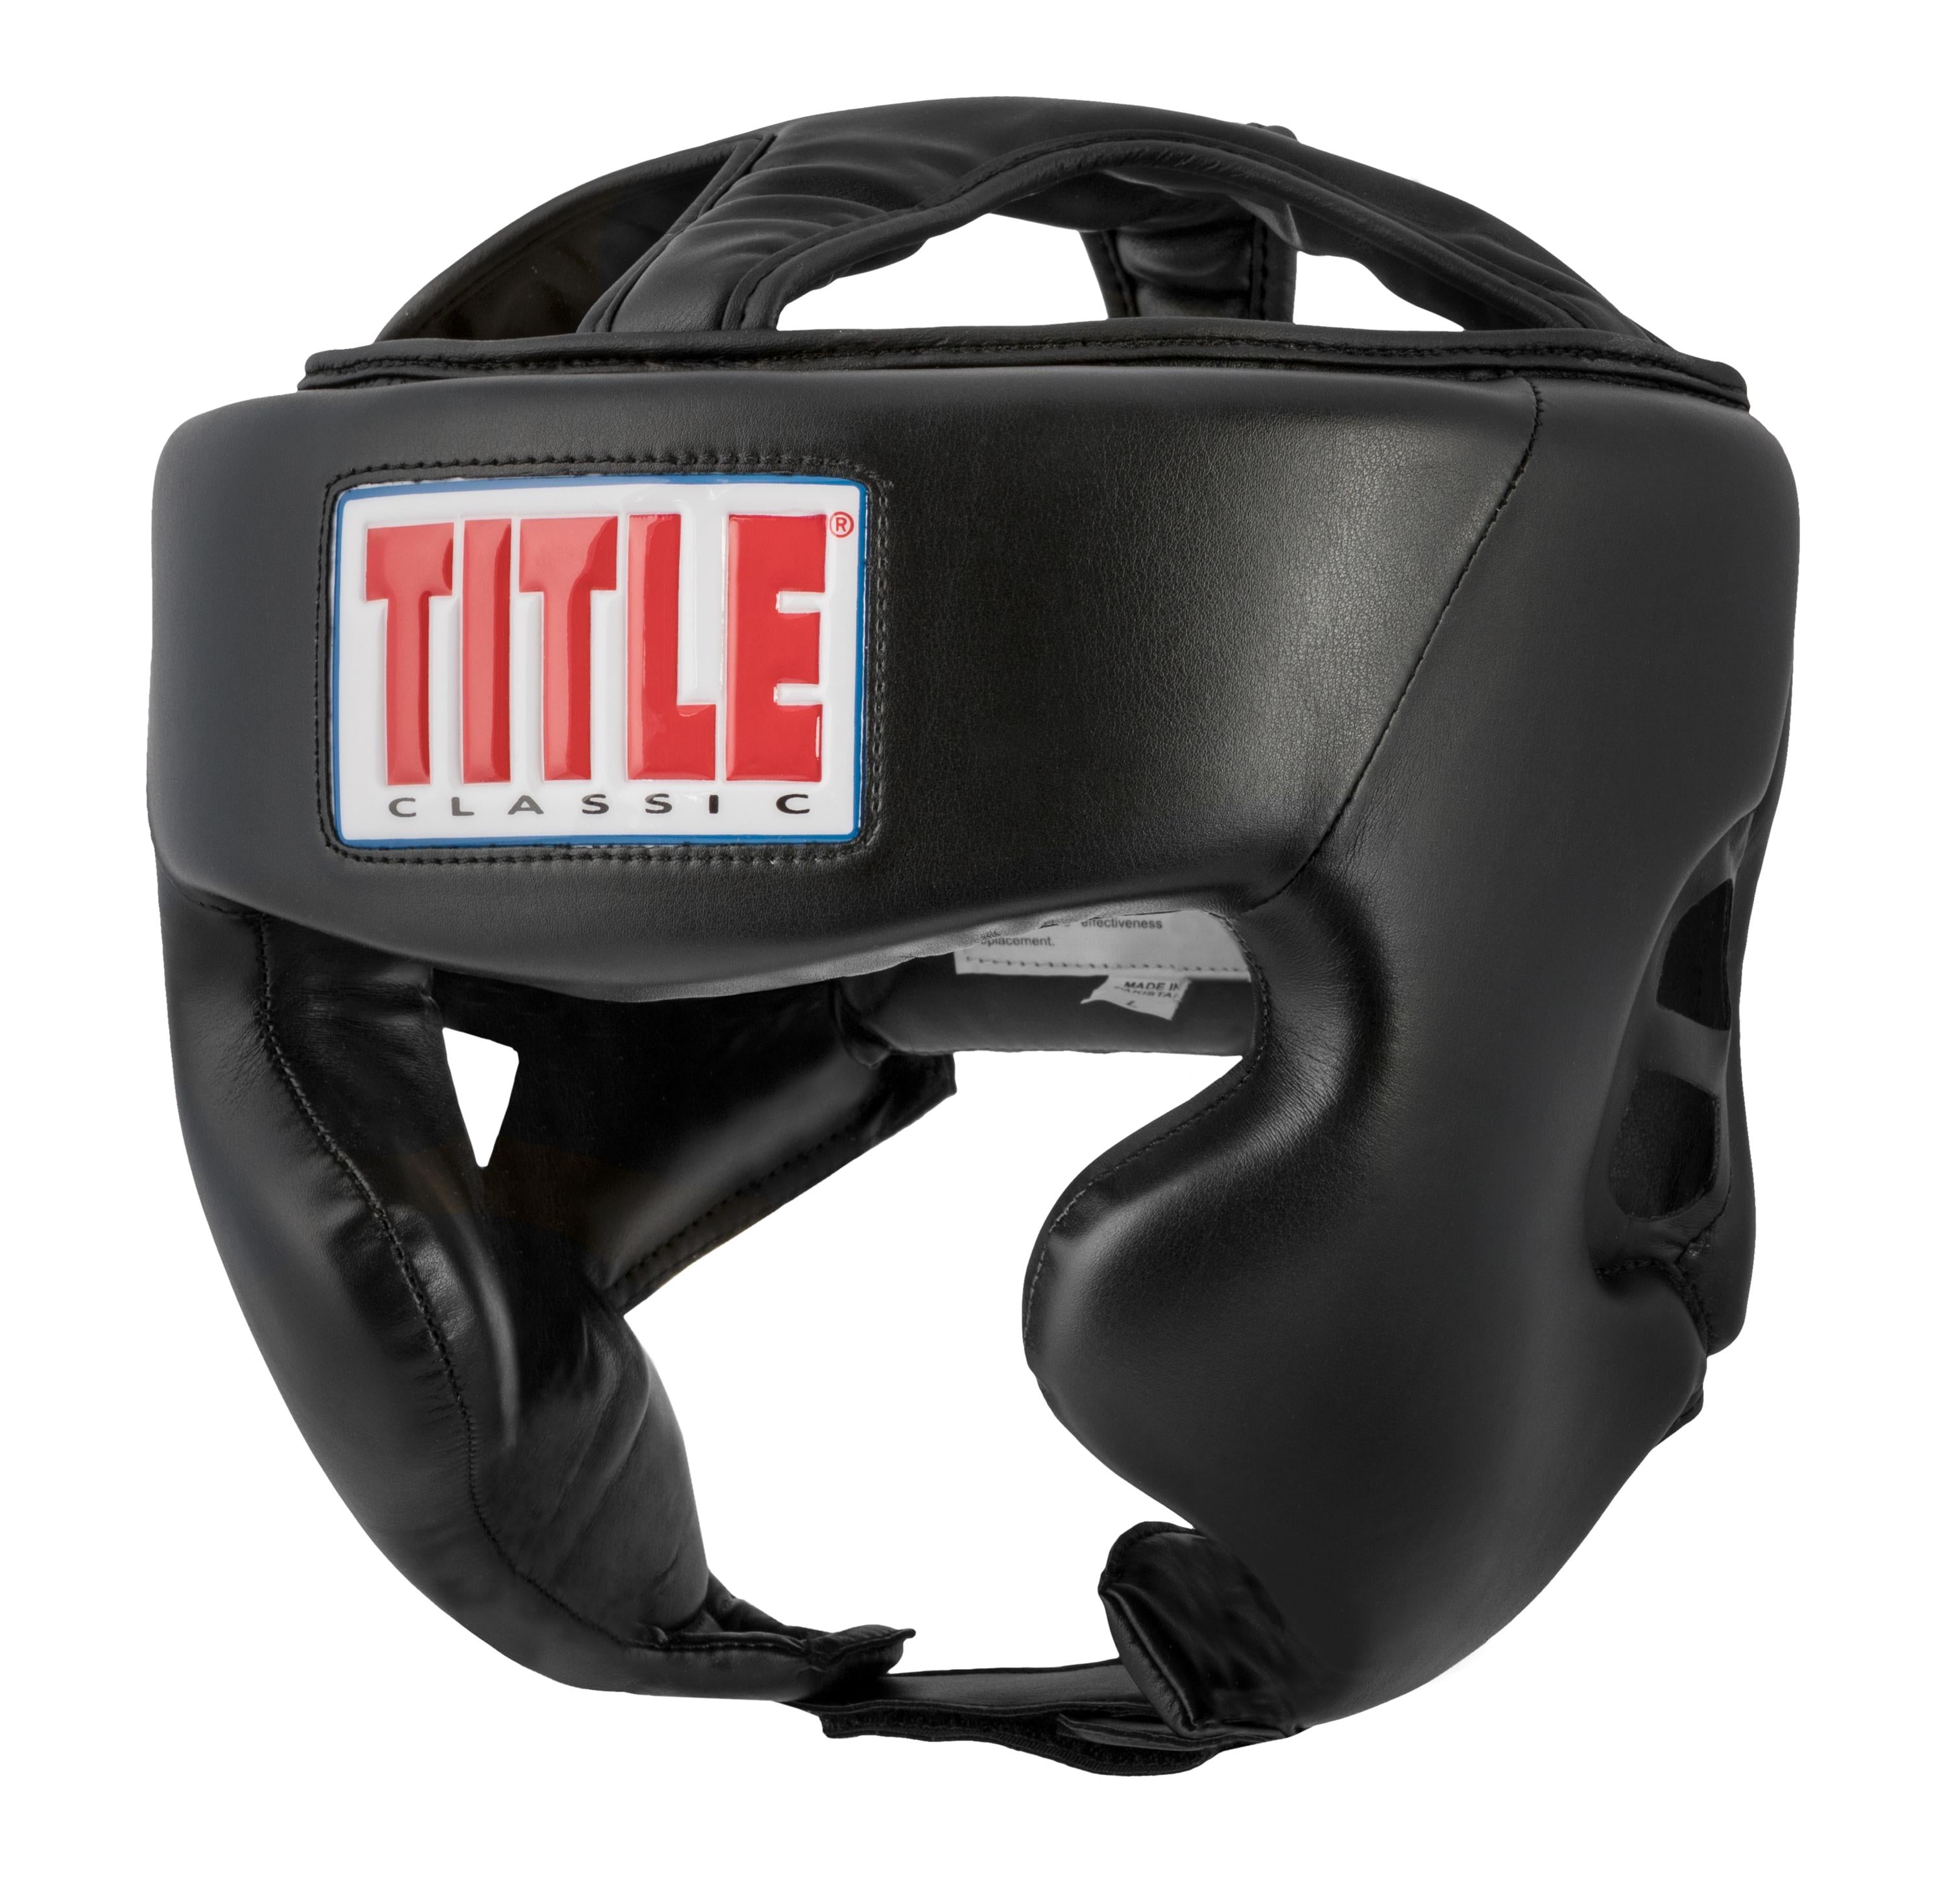 TITLE Classic Hi-Performance Headgear 2.0